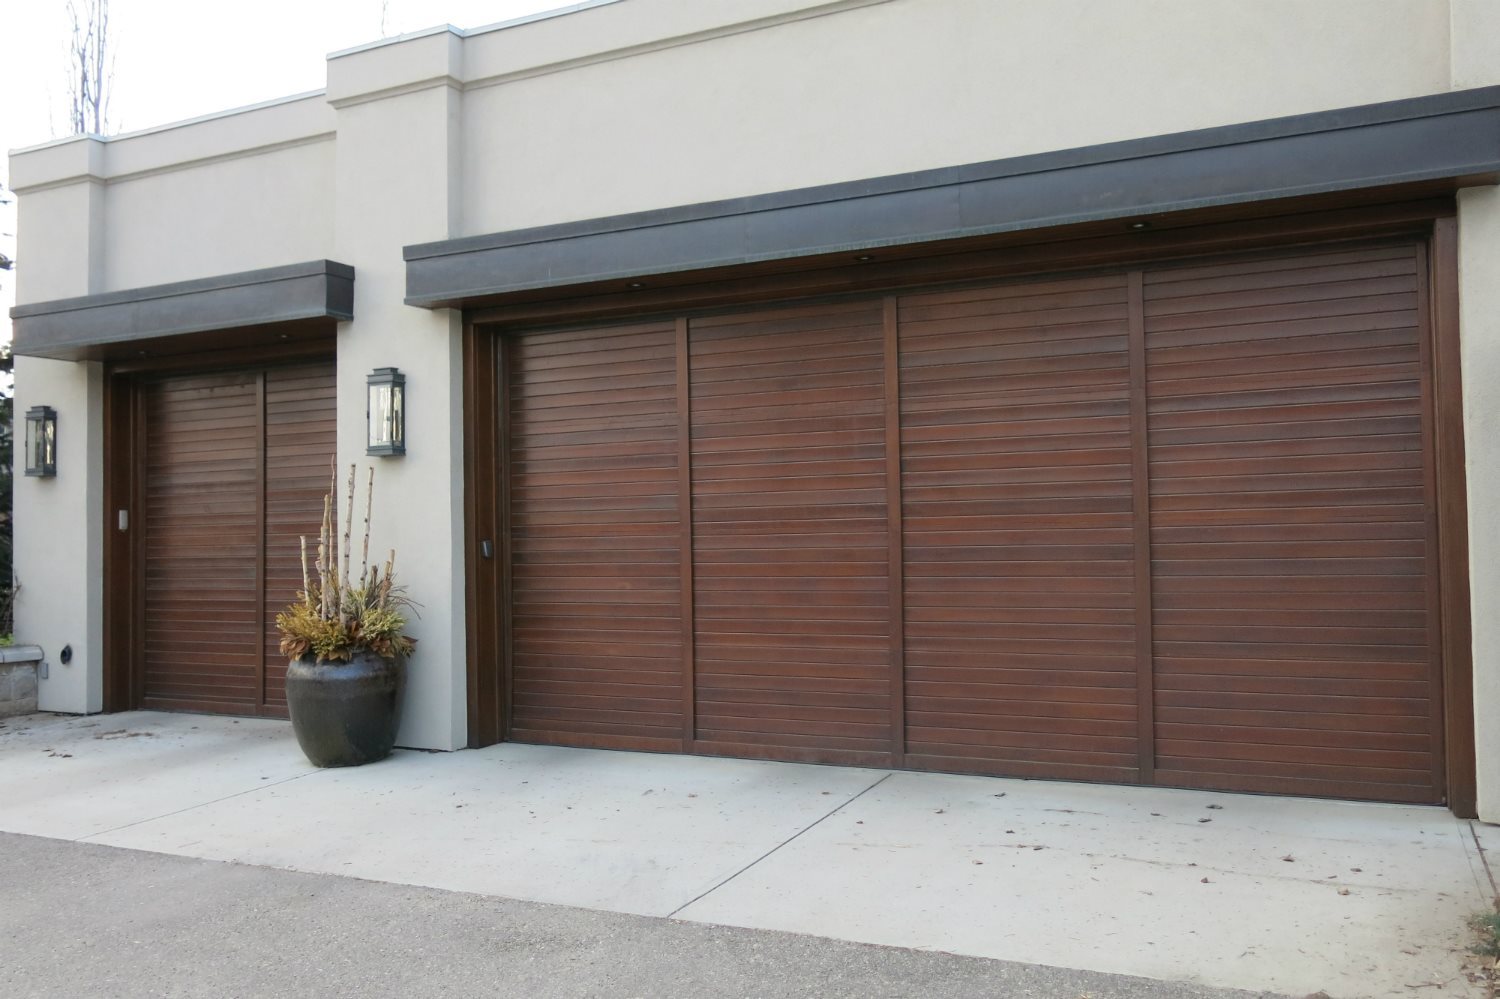 Creatice Garage Door Installation Orlando for Large Space